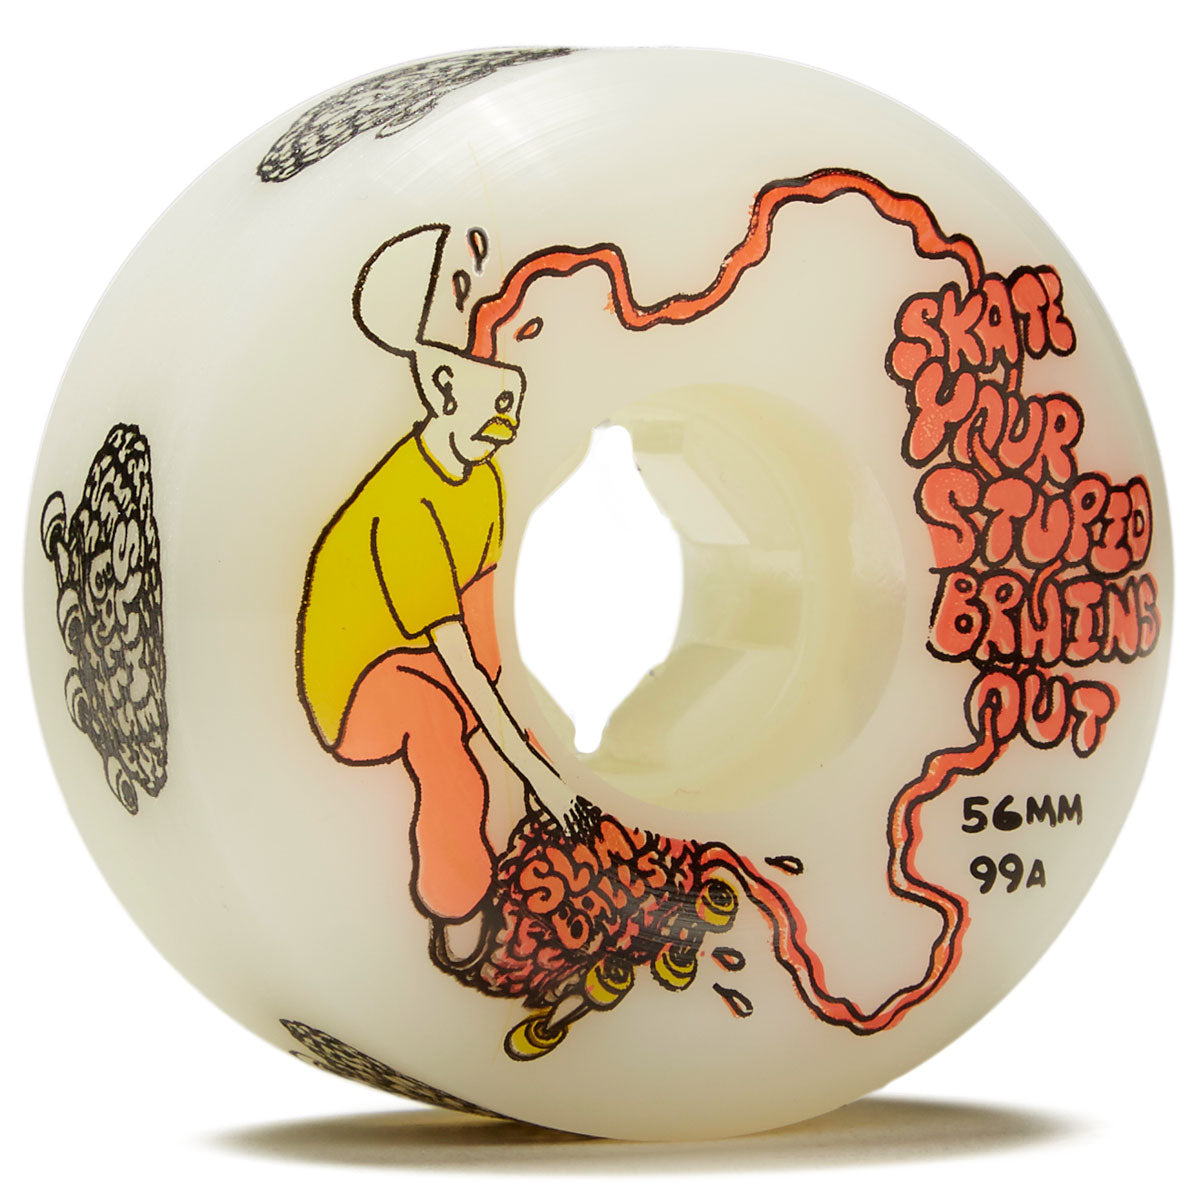 Slime Balls Stupid Brains Speed Balls 99a Skateboard Wheels - White - 56mm image 1